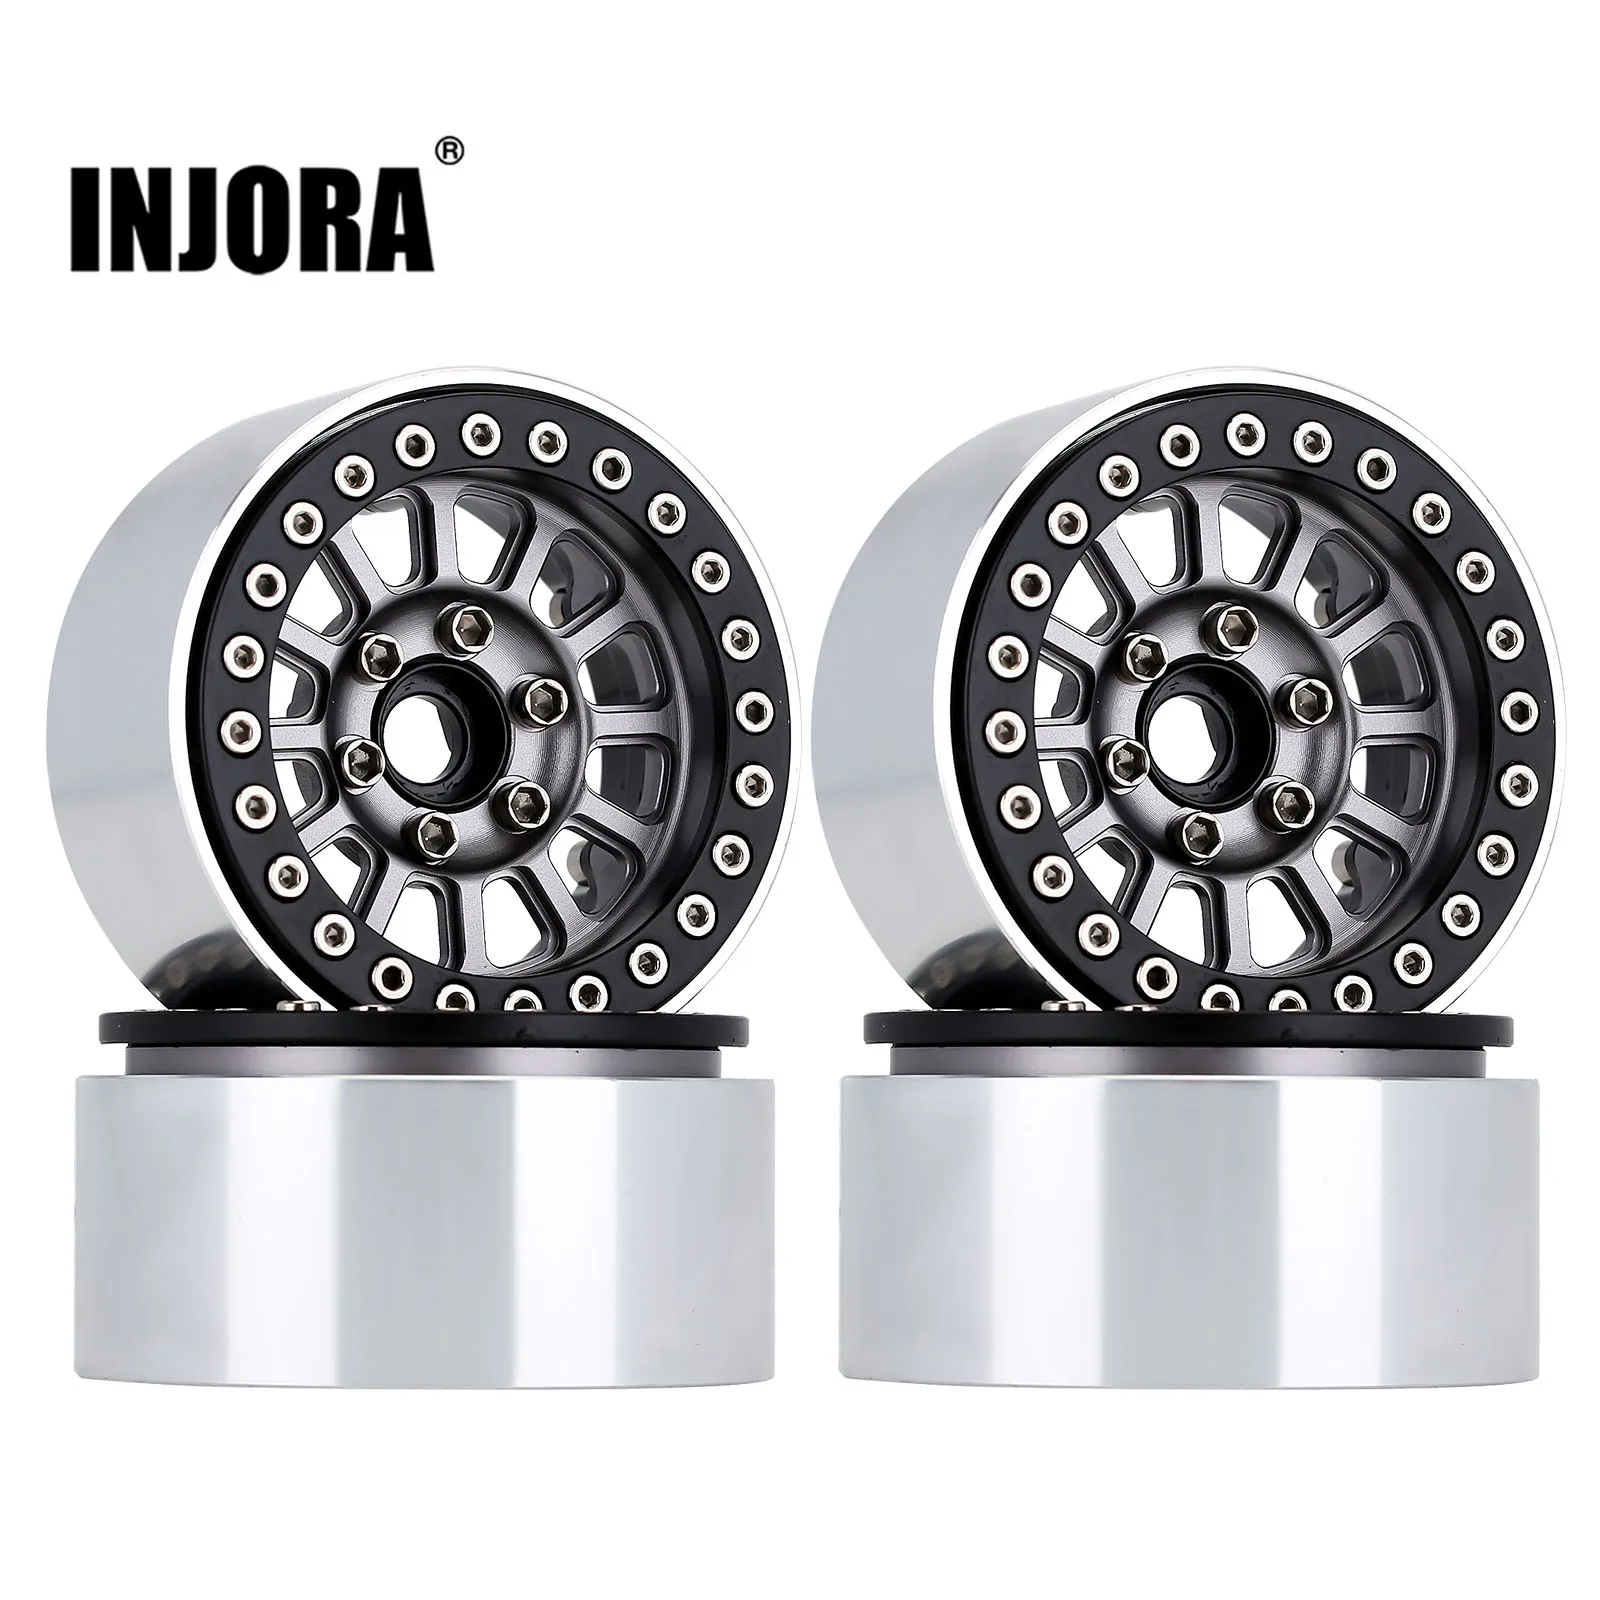 INJORA Aluminum 1.9" Beadlock Wheel Rim for 1/10 RC Crawler Car TRX-4 Axial SCX10 90046 AXI03007 Upgrade Parts